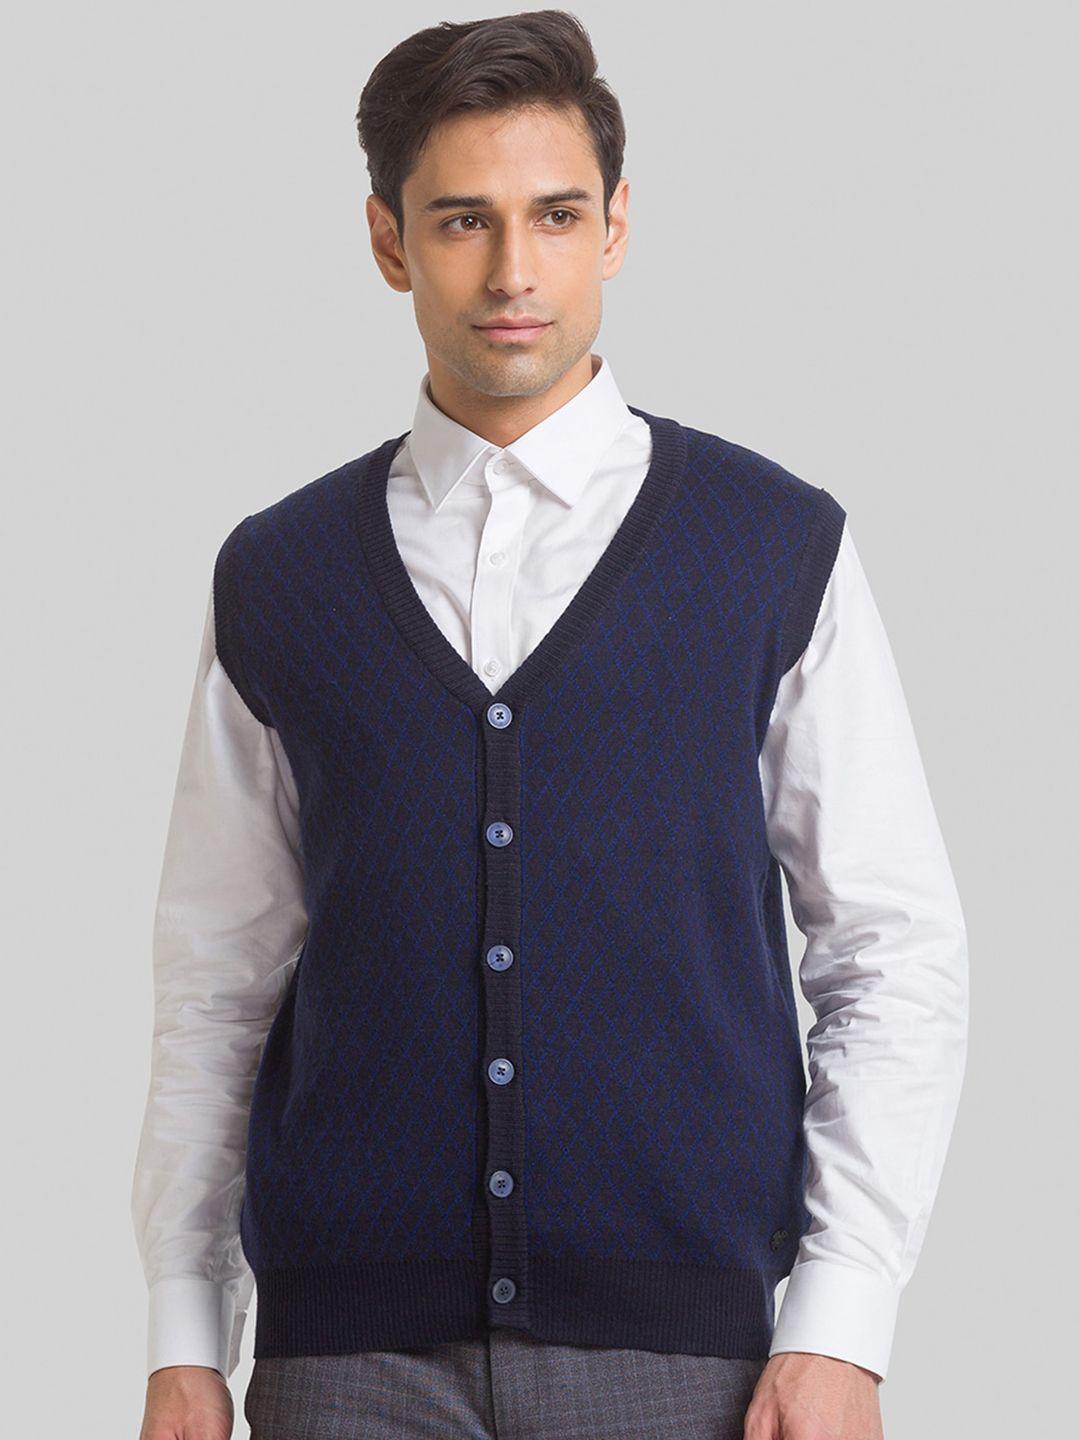 raymond men geometric printed sleeveless knitted sweater vest